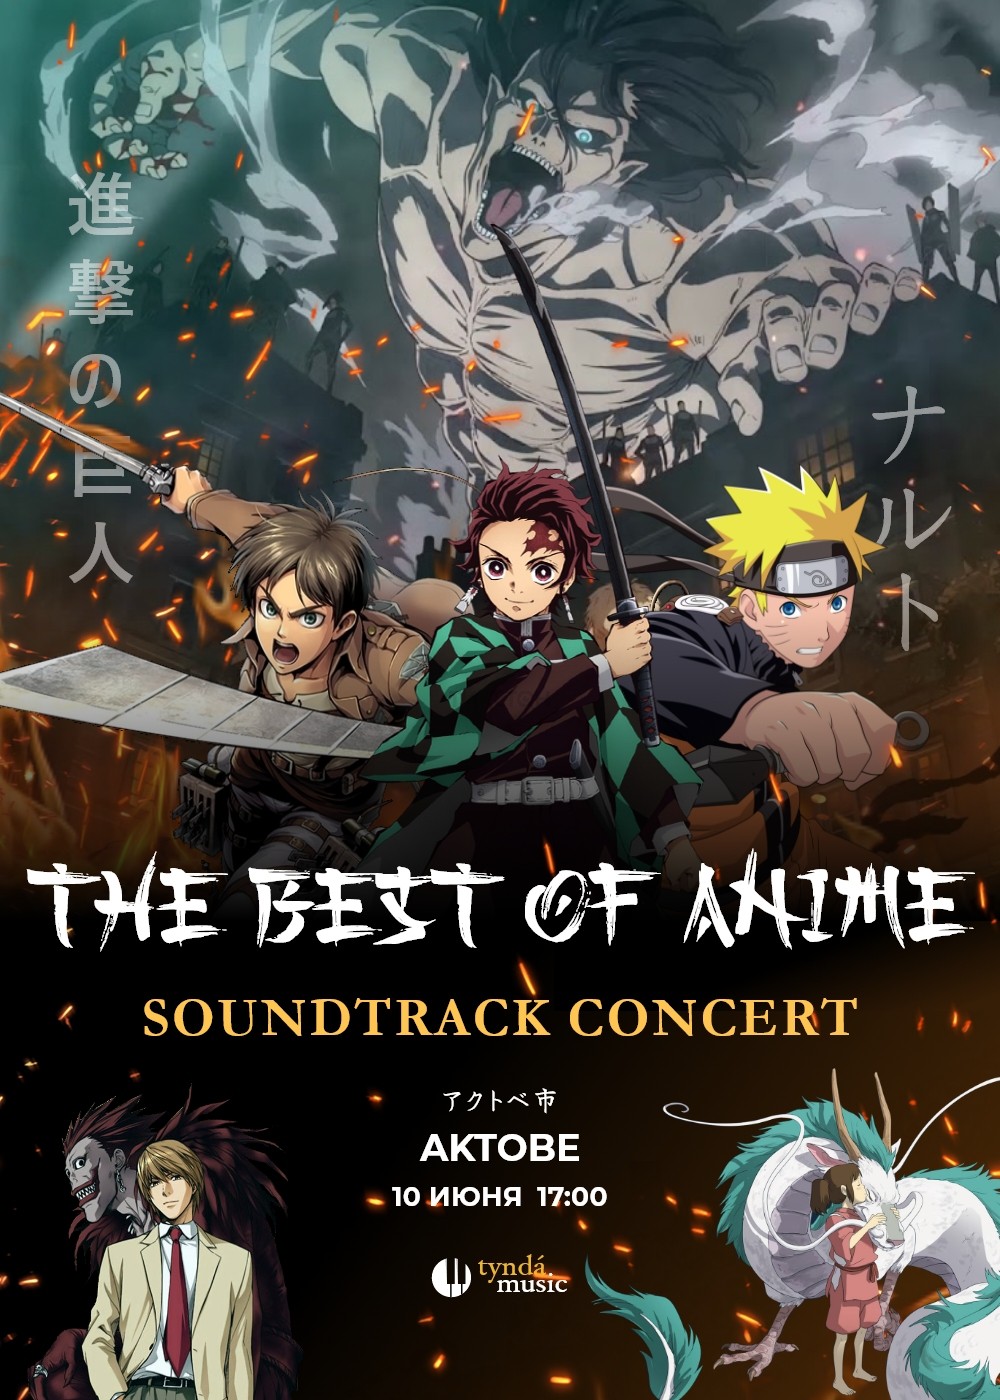 The Best of Anime в Актобе